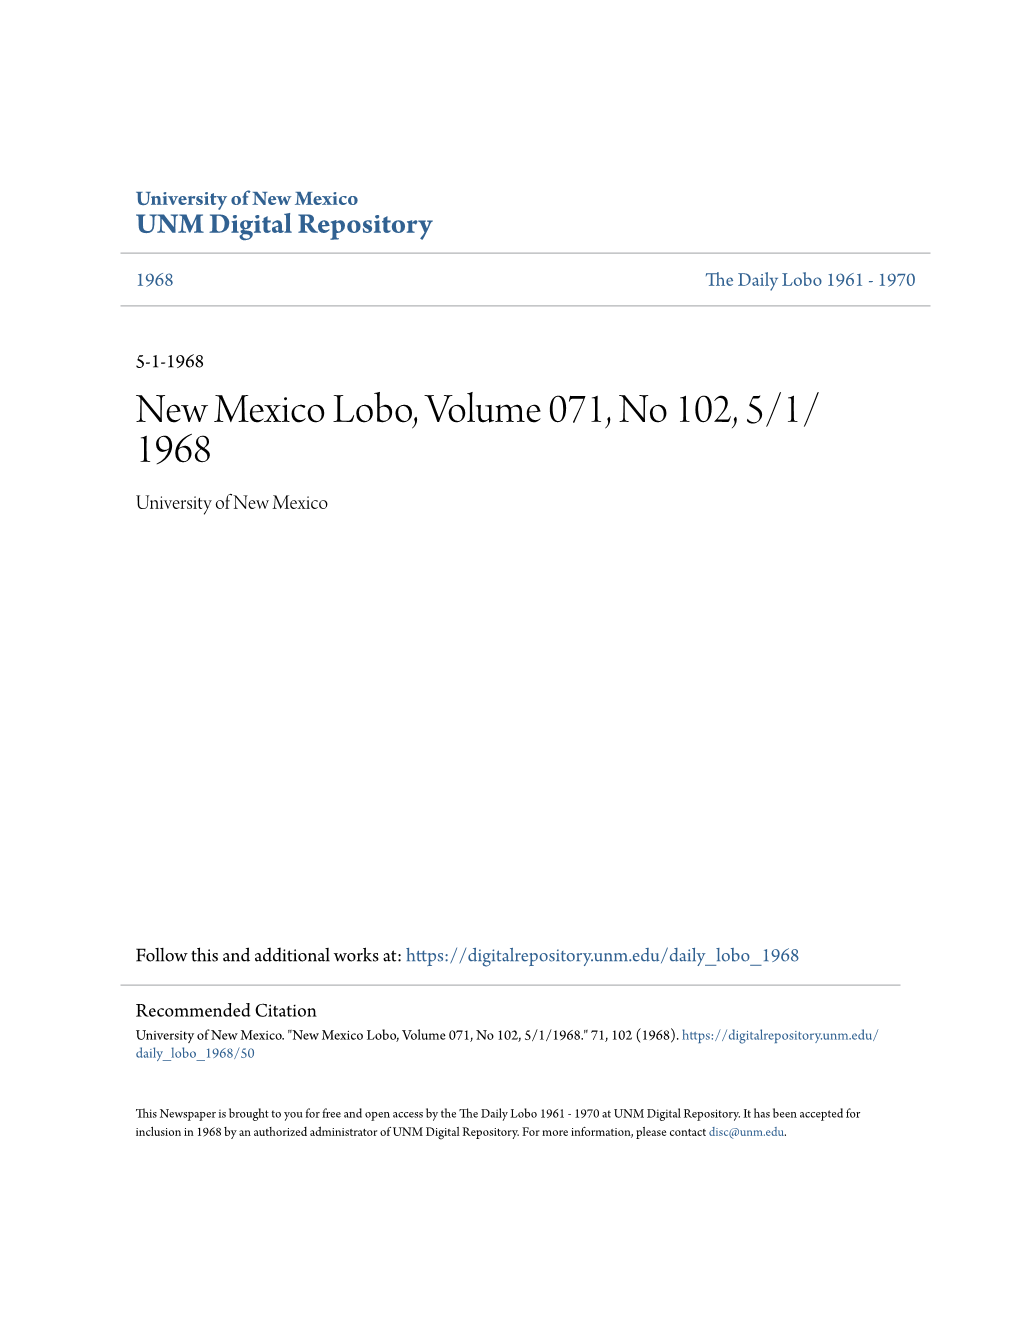 New Mexico Lobo, Volume 071, No 102, 5/1/1968." 71, 102 (1968)